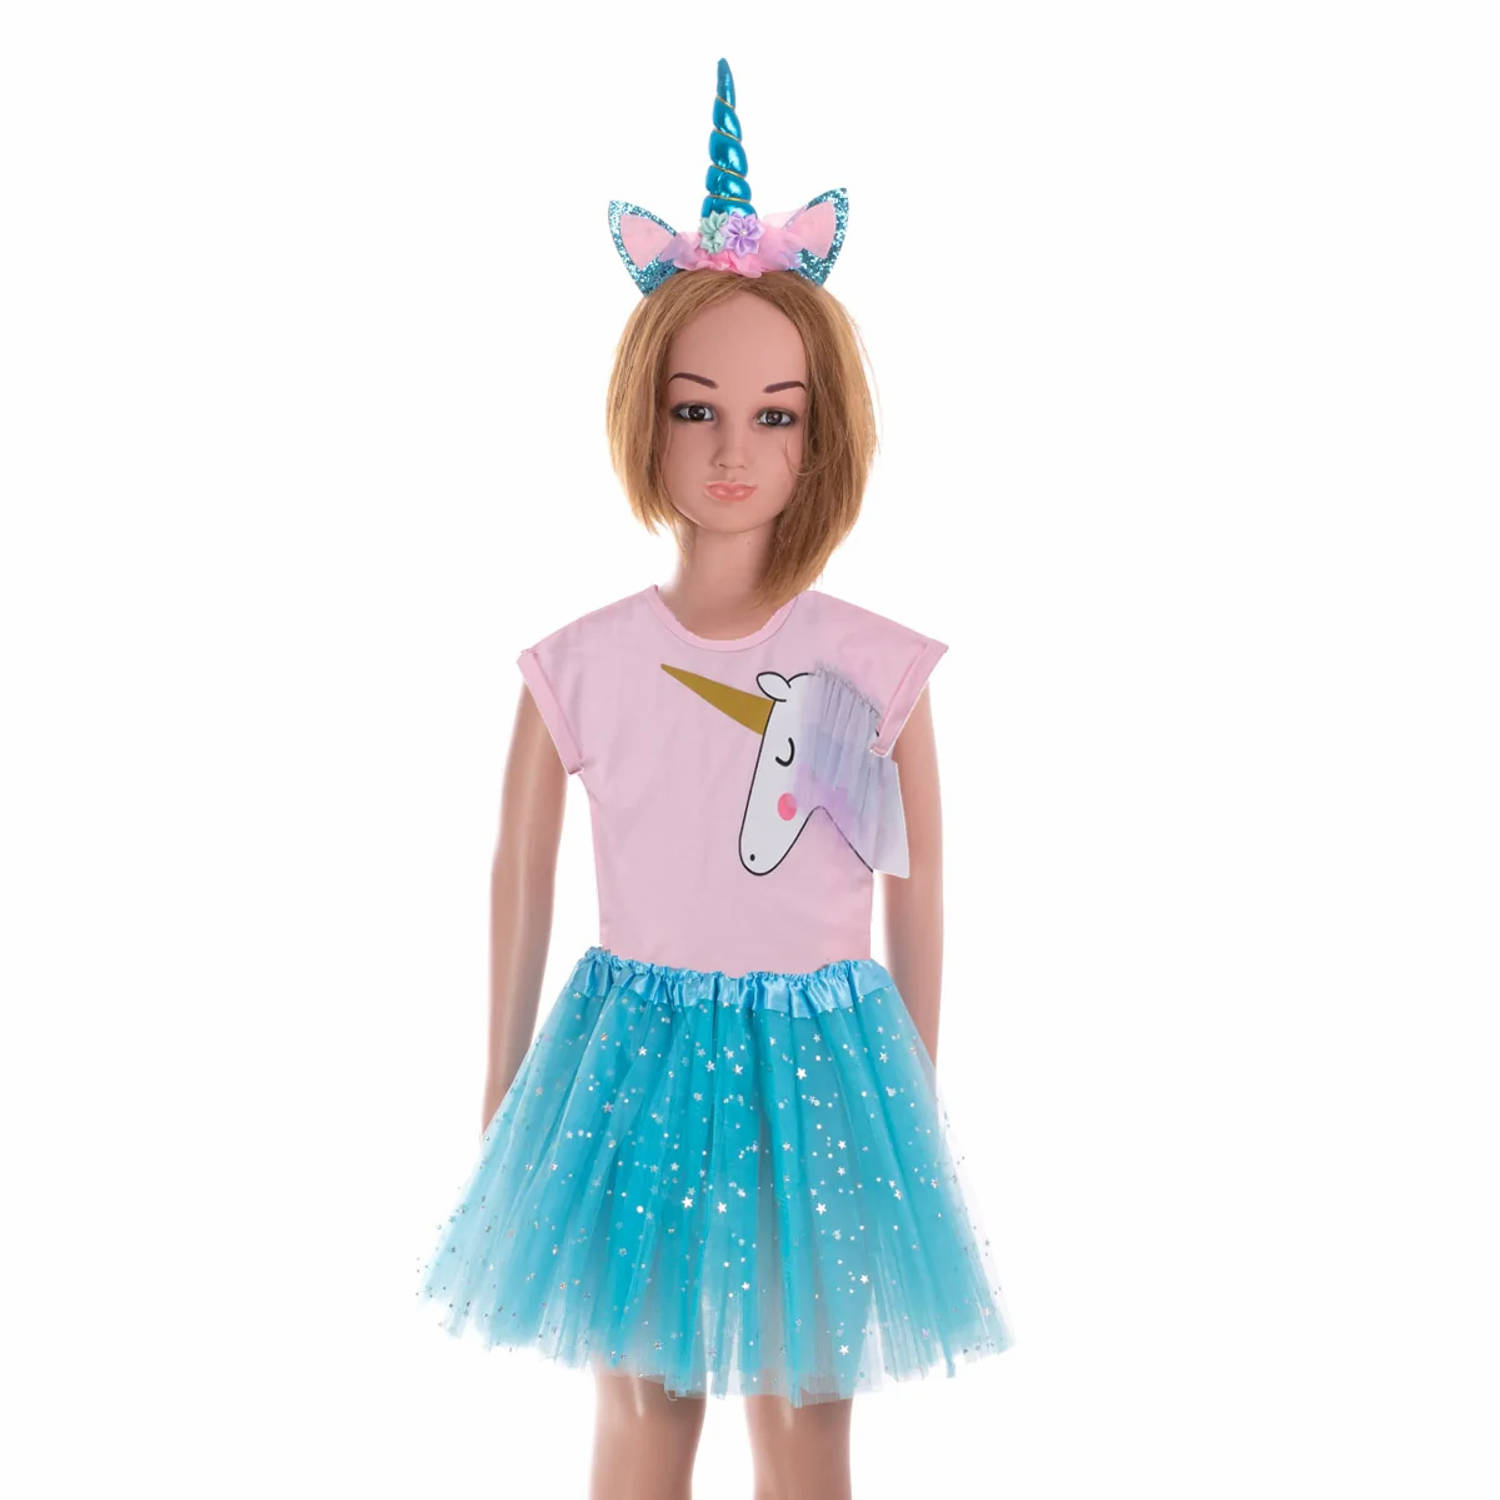 verkleedkleren / carnaval outfit unicorn glitters met tutu blauw | Blokker